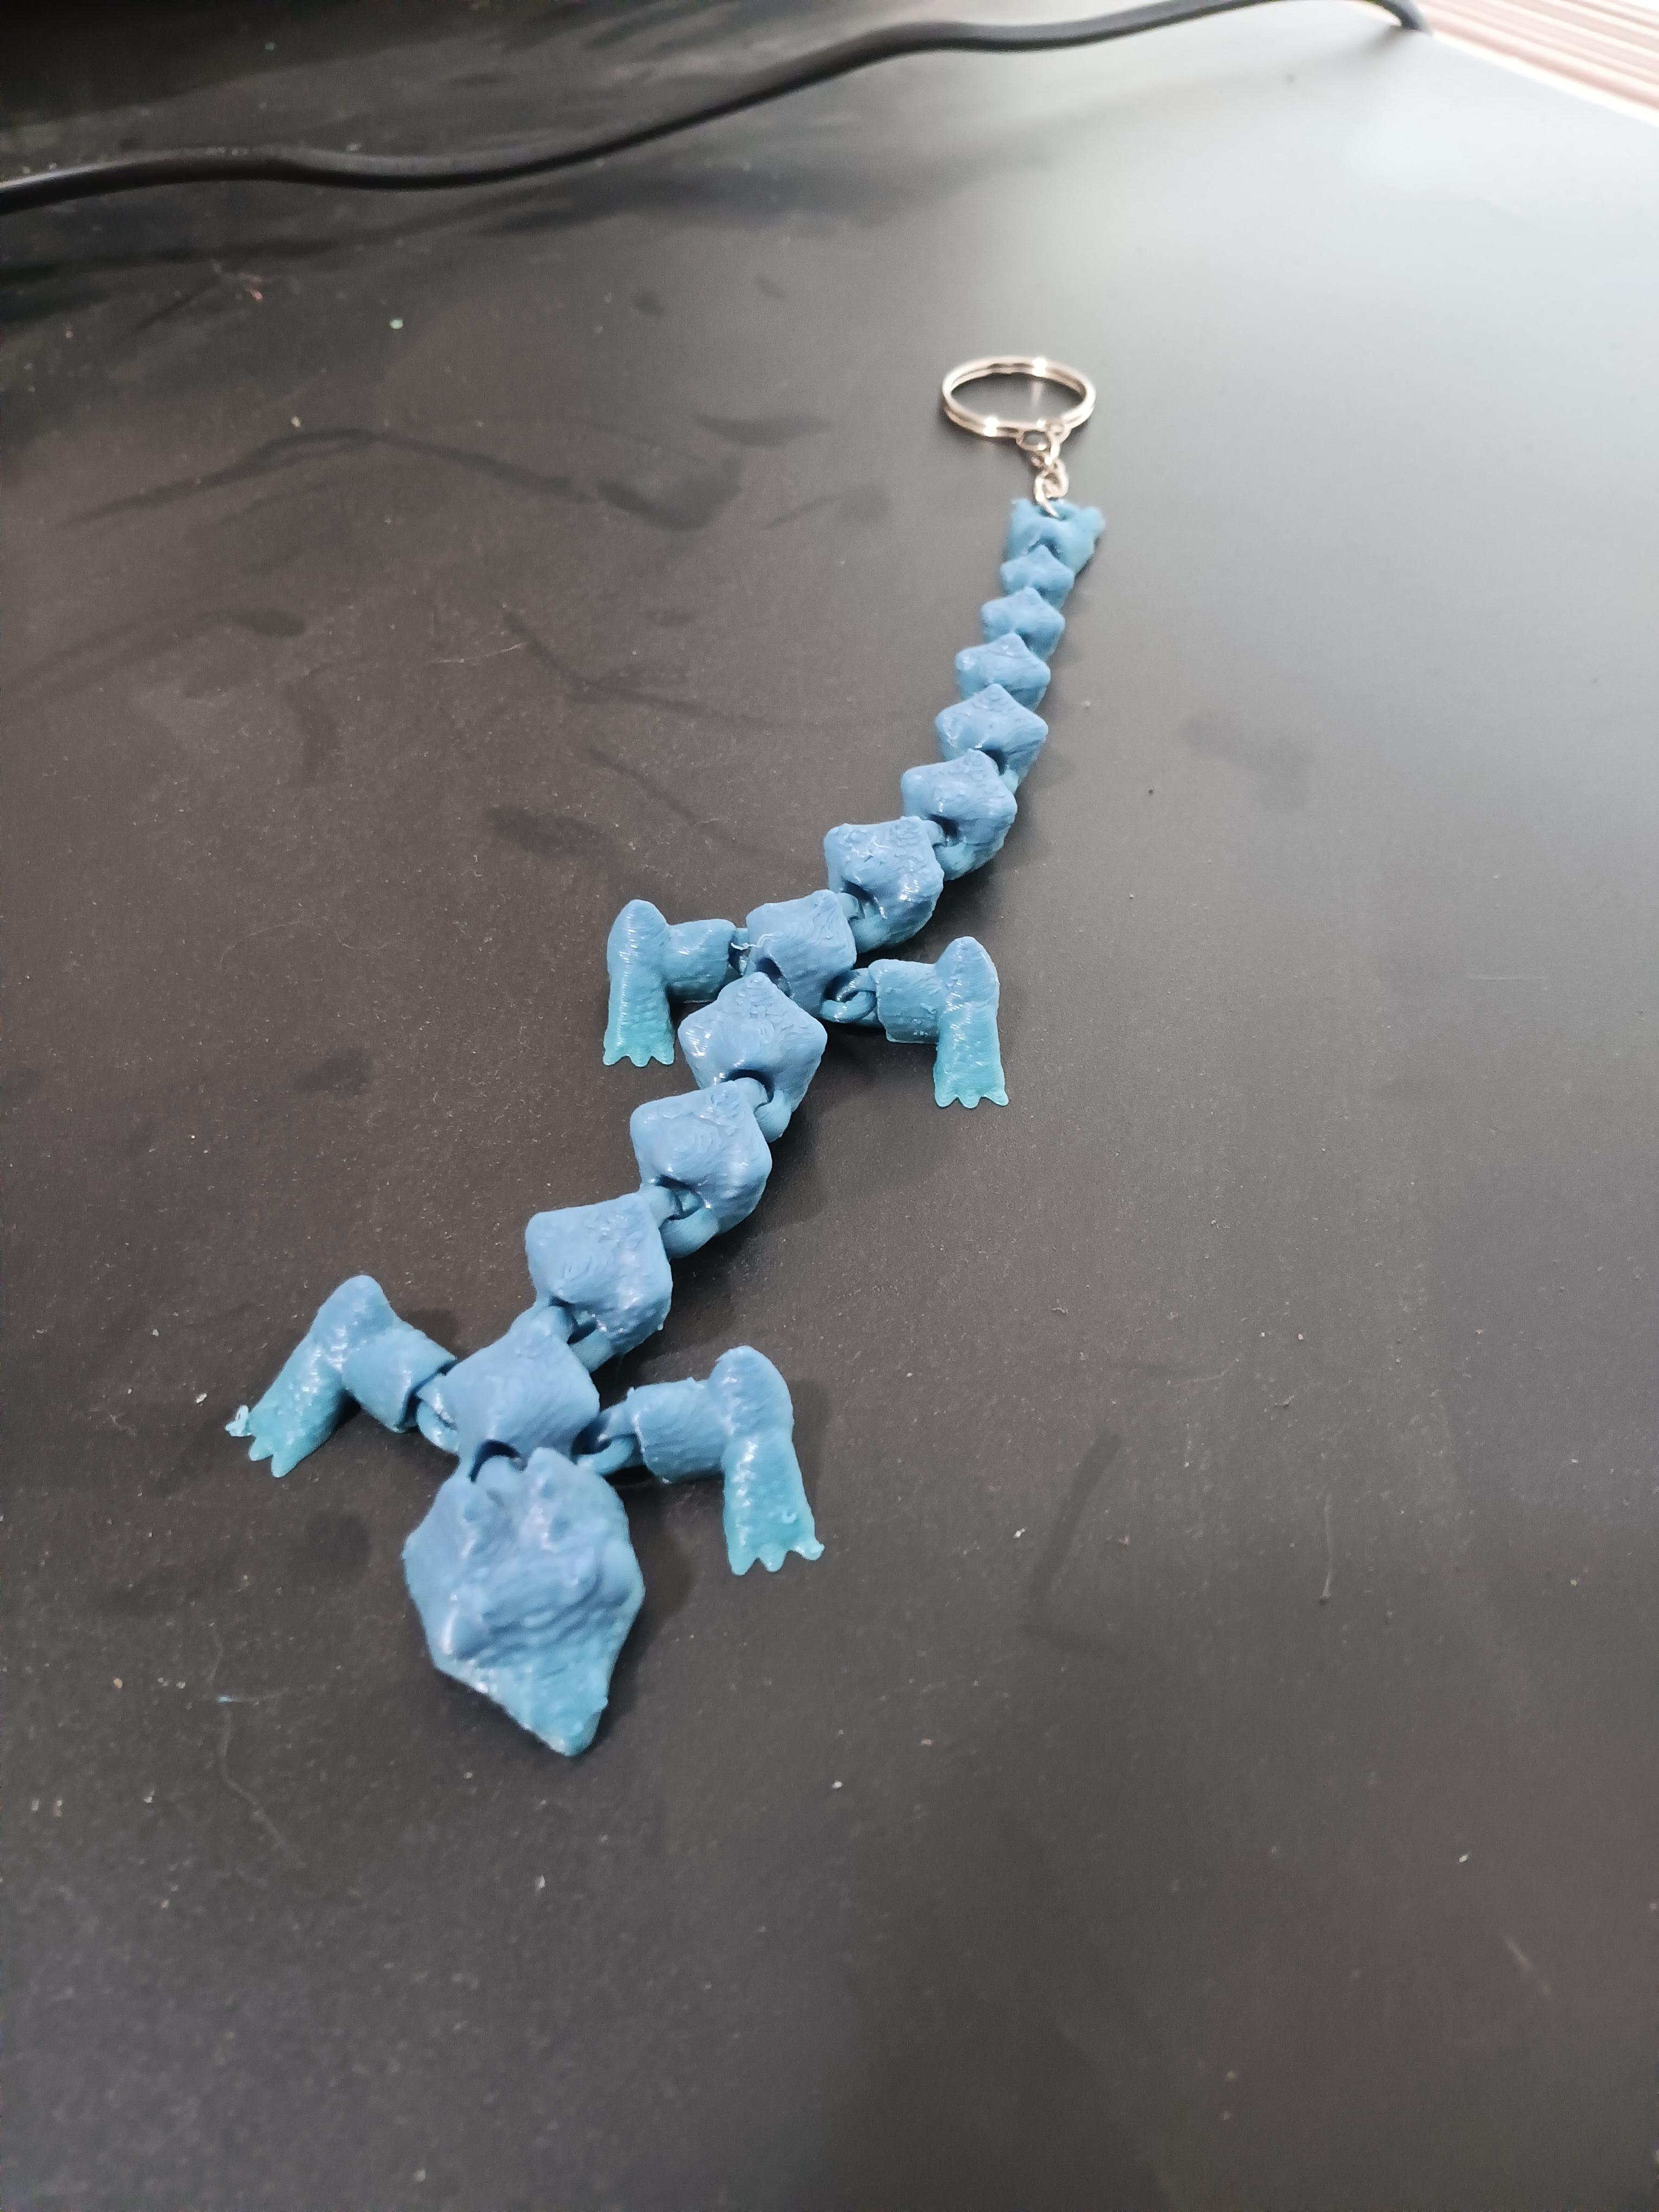 Articulated Lizard Dragon Keychain - print in place - flexi fidget toy 3d model